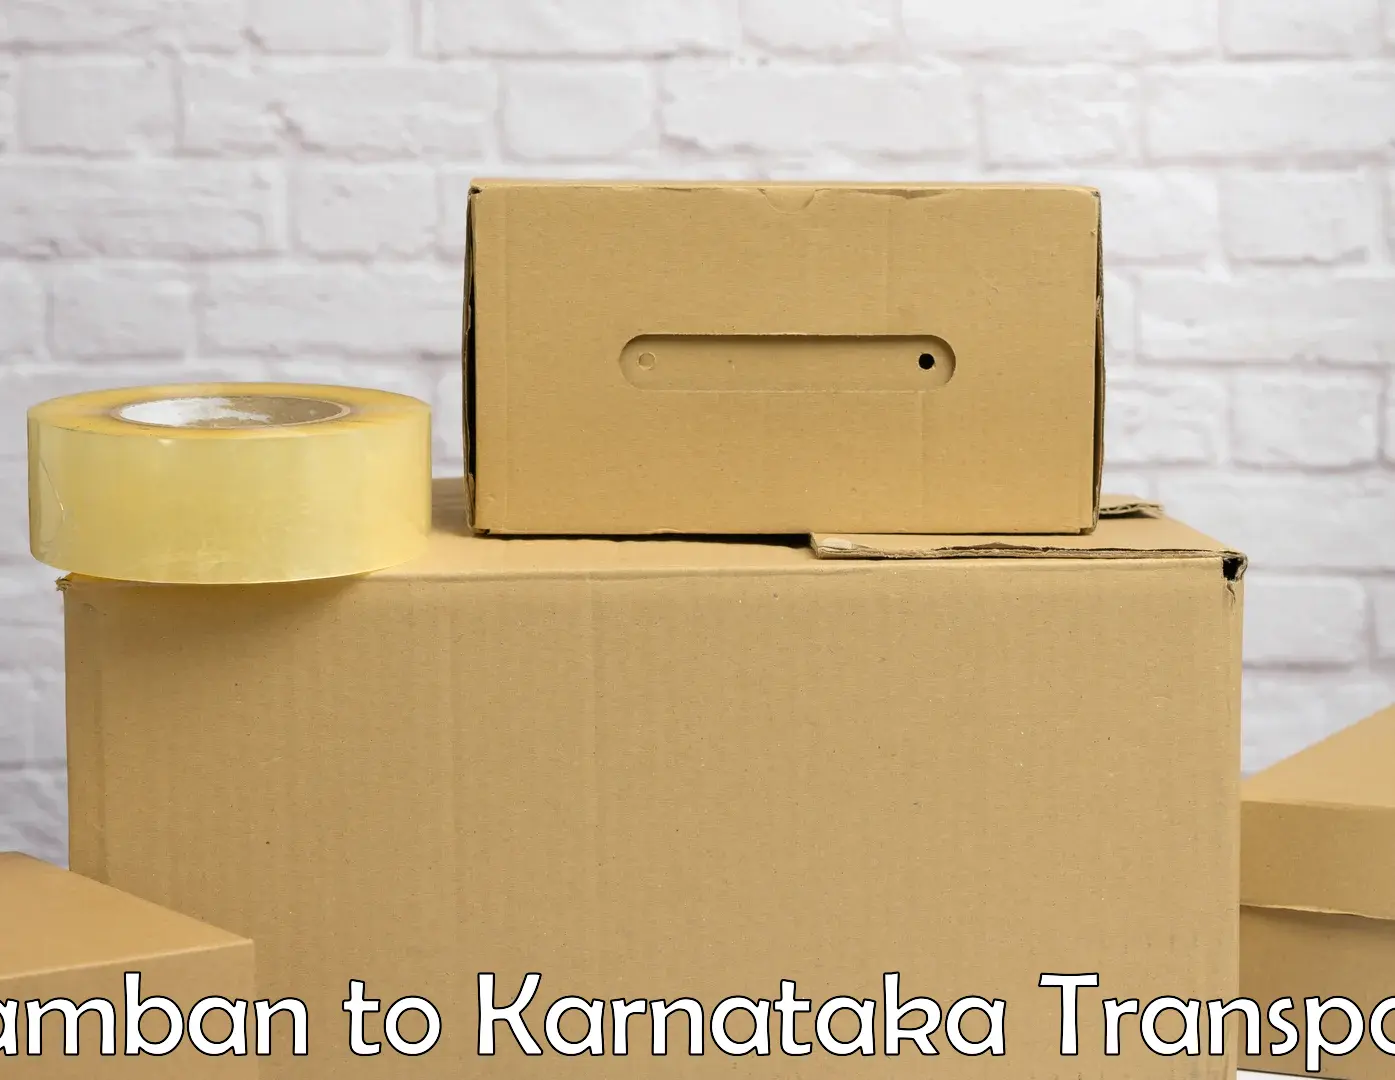 Transport bike from one state to another Ramban to Karnataka